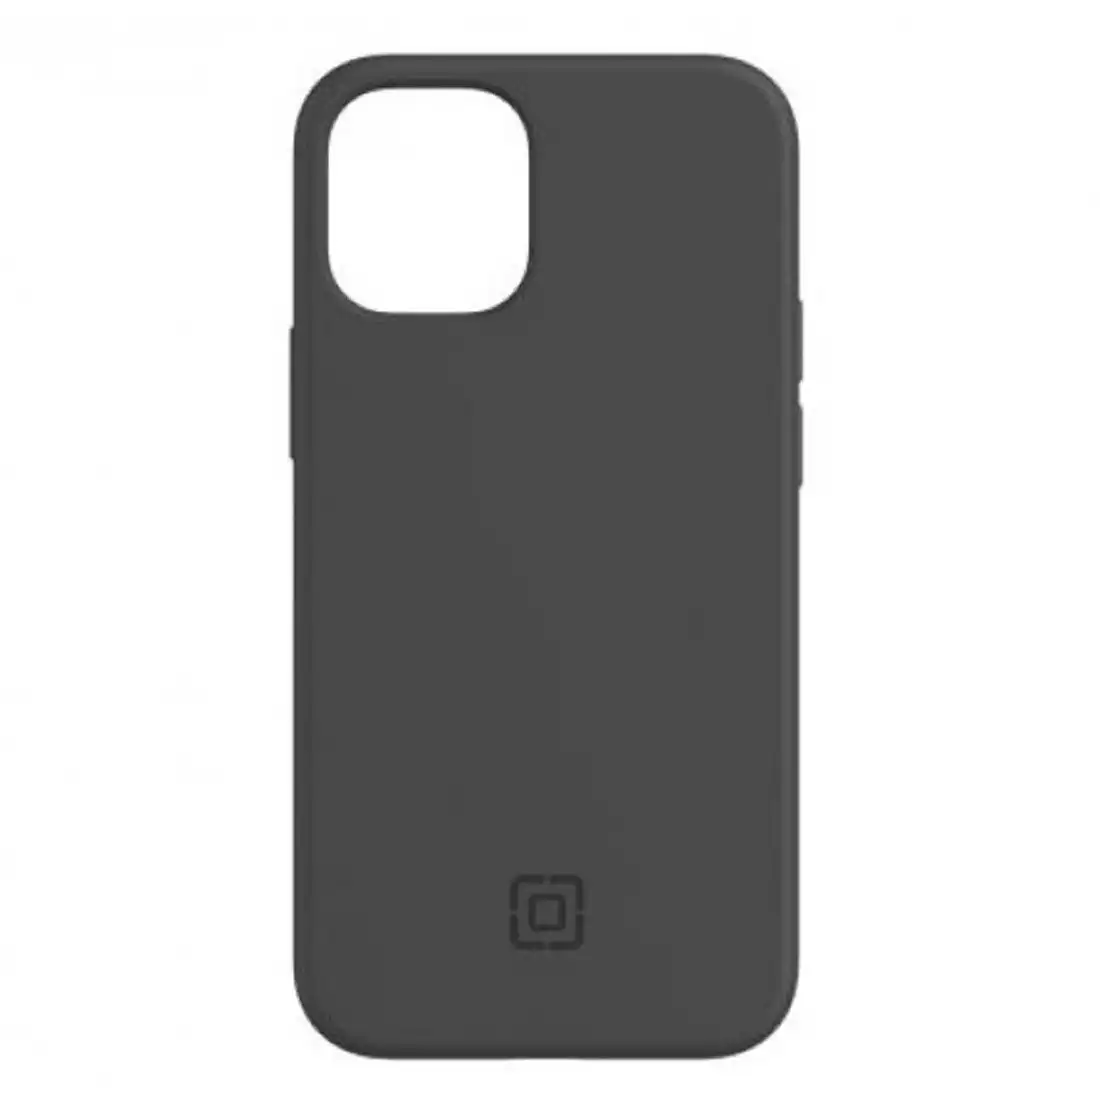 Incipio Organicore 2.0 Case for iPhone 12 Mini - Charcoal